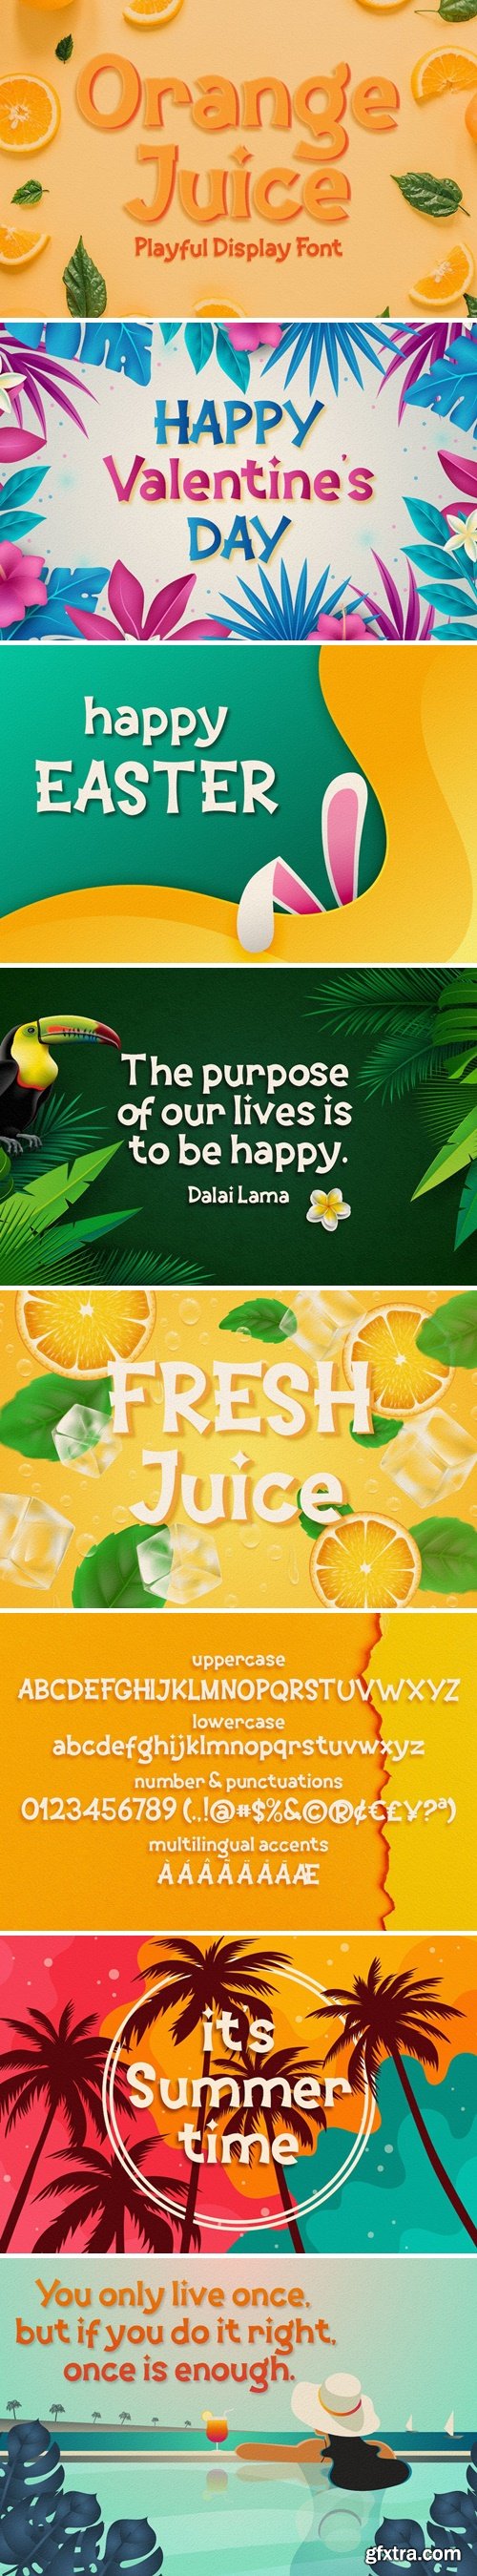 Orange Juice | Display Font